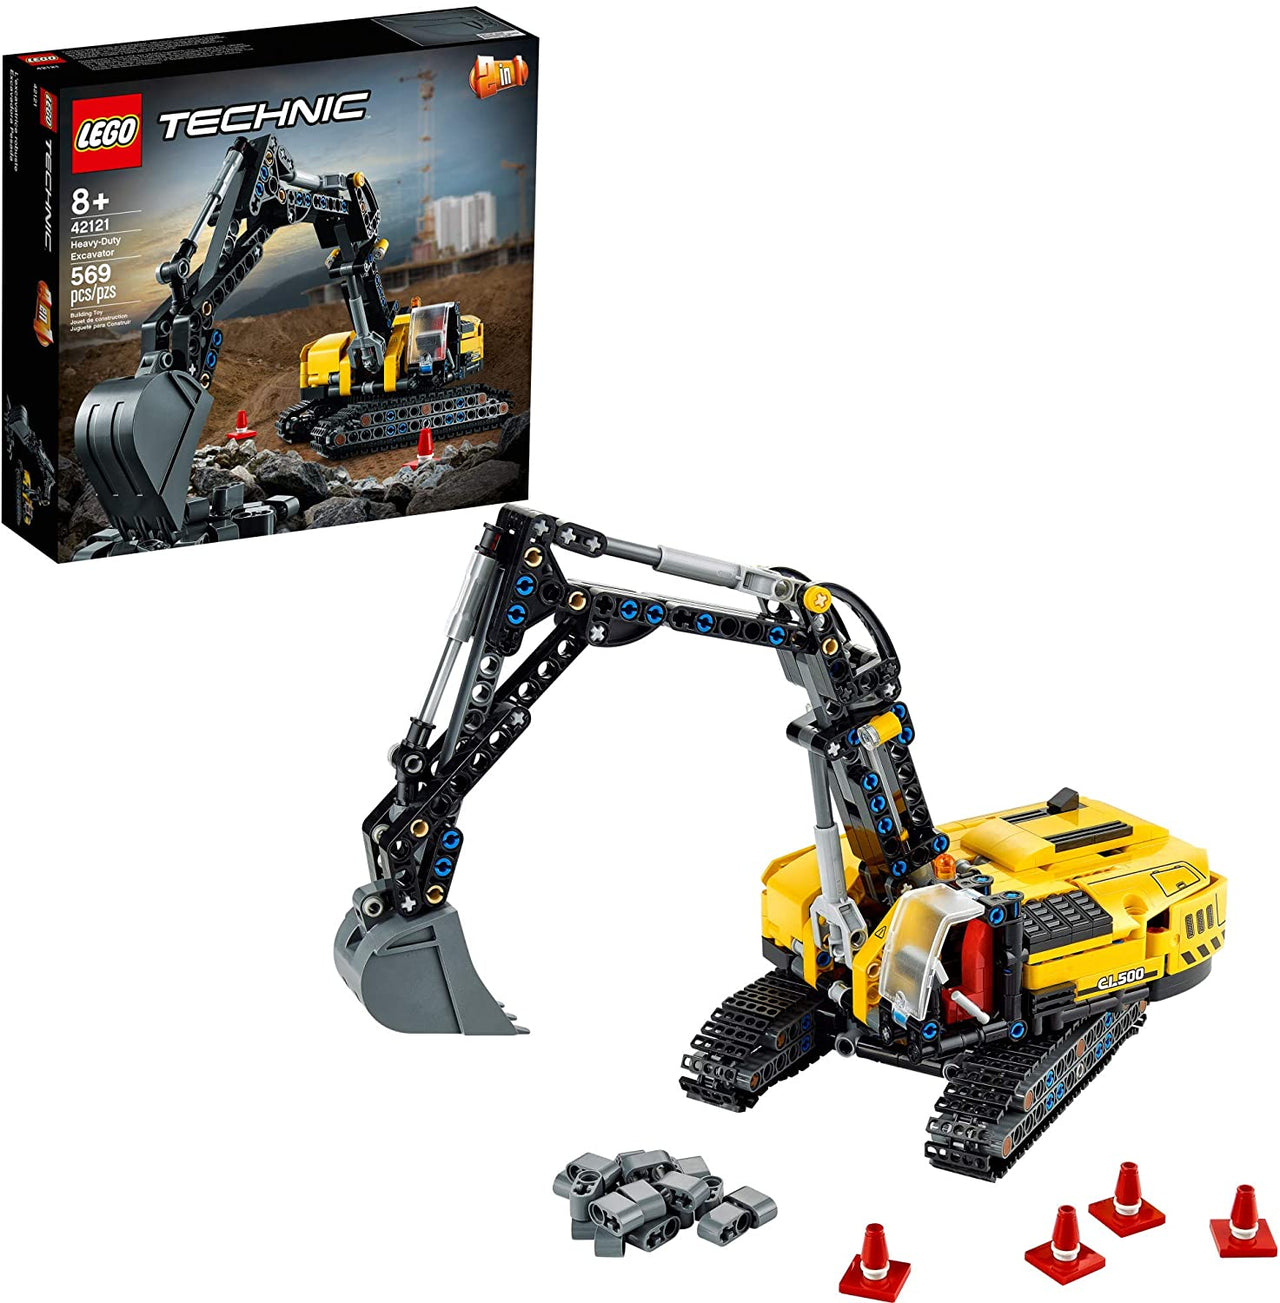 42121 LEGO Technic Excavadora CL500 (569 Piezas) - CAT SERVICE PERU S.A.C.